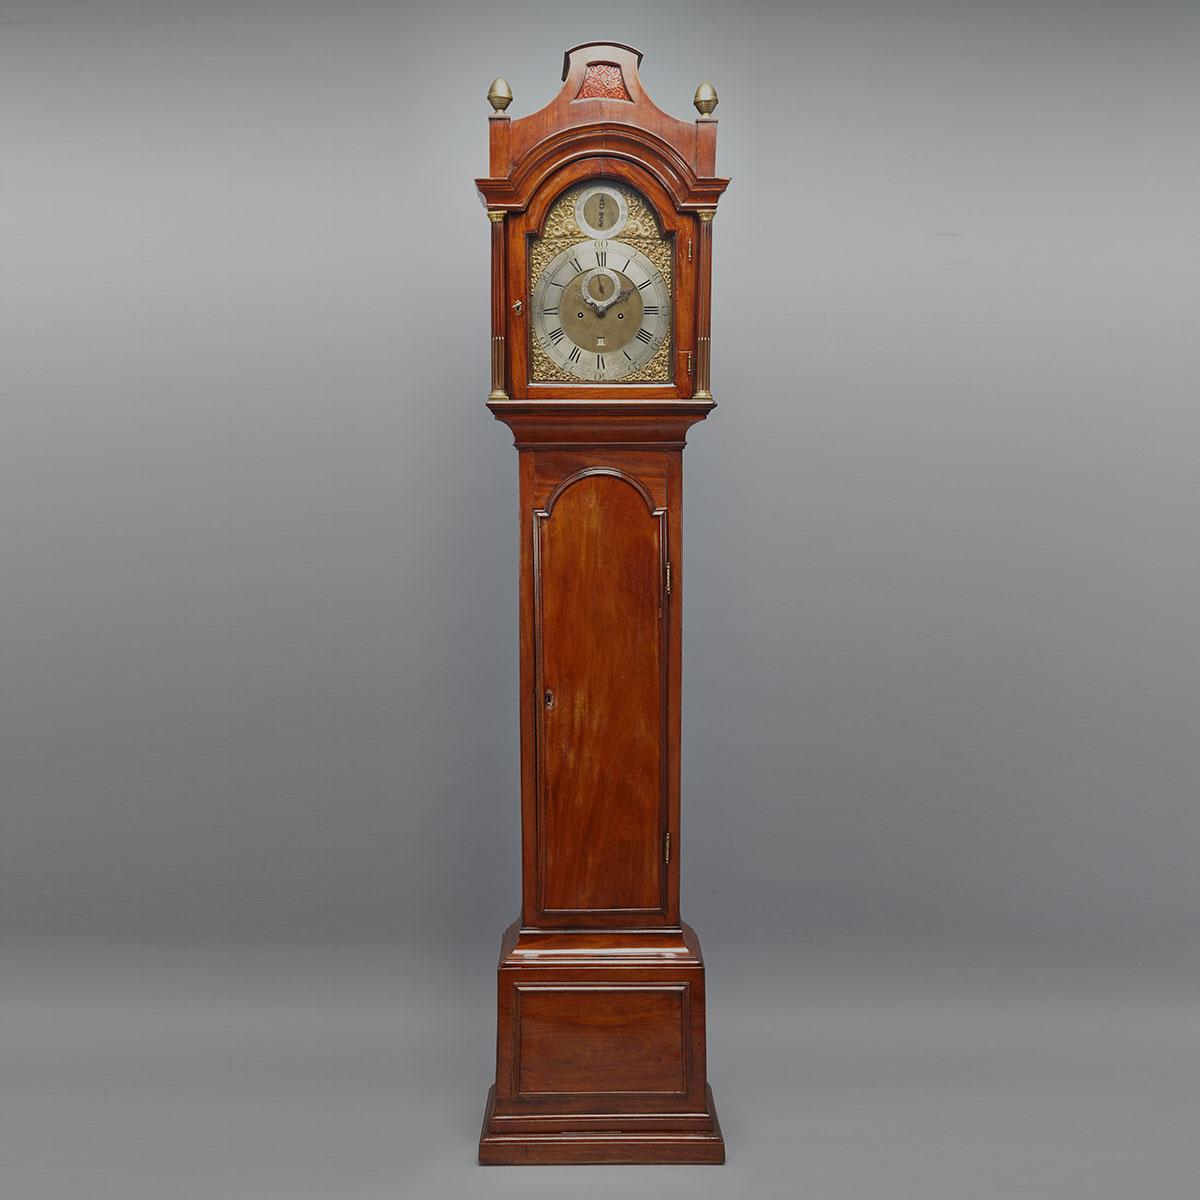 George III Mahogany Tall case clock, John Ellicott, London, c.1750